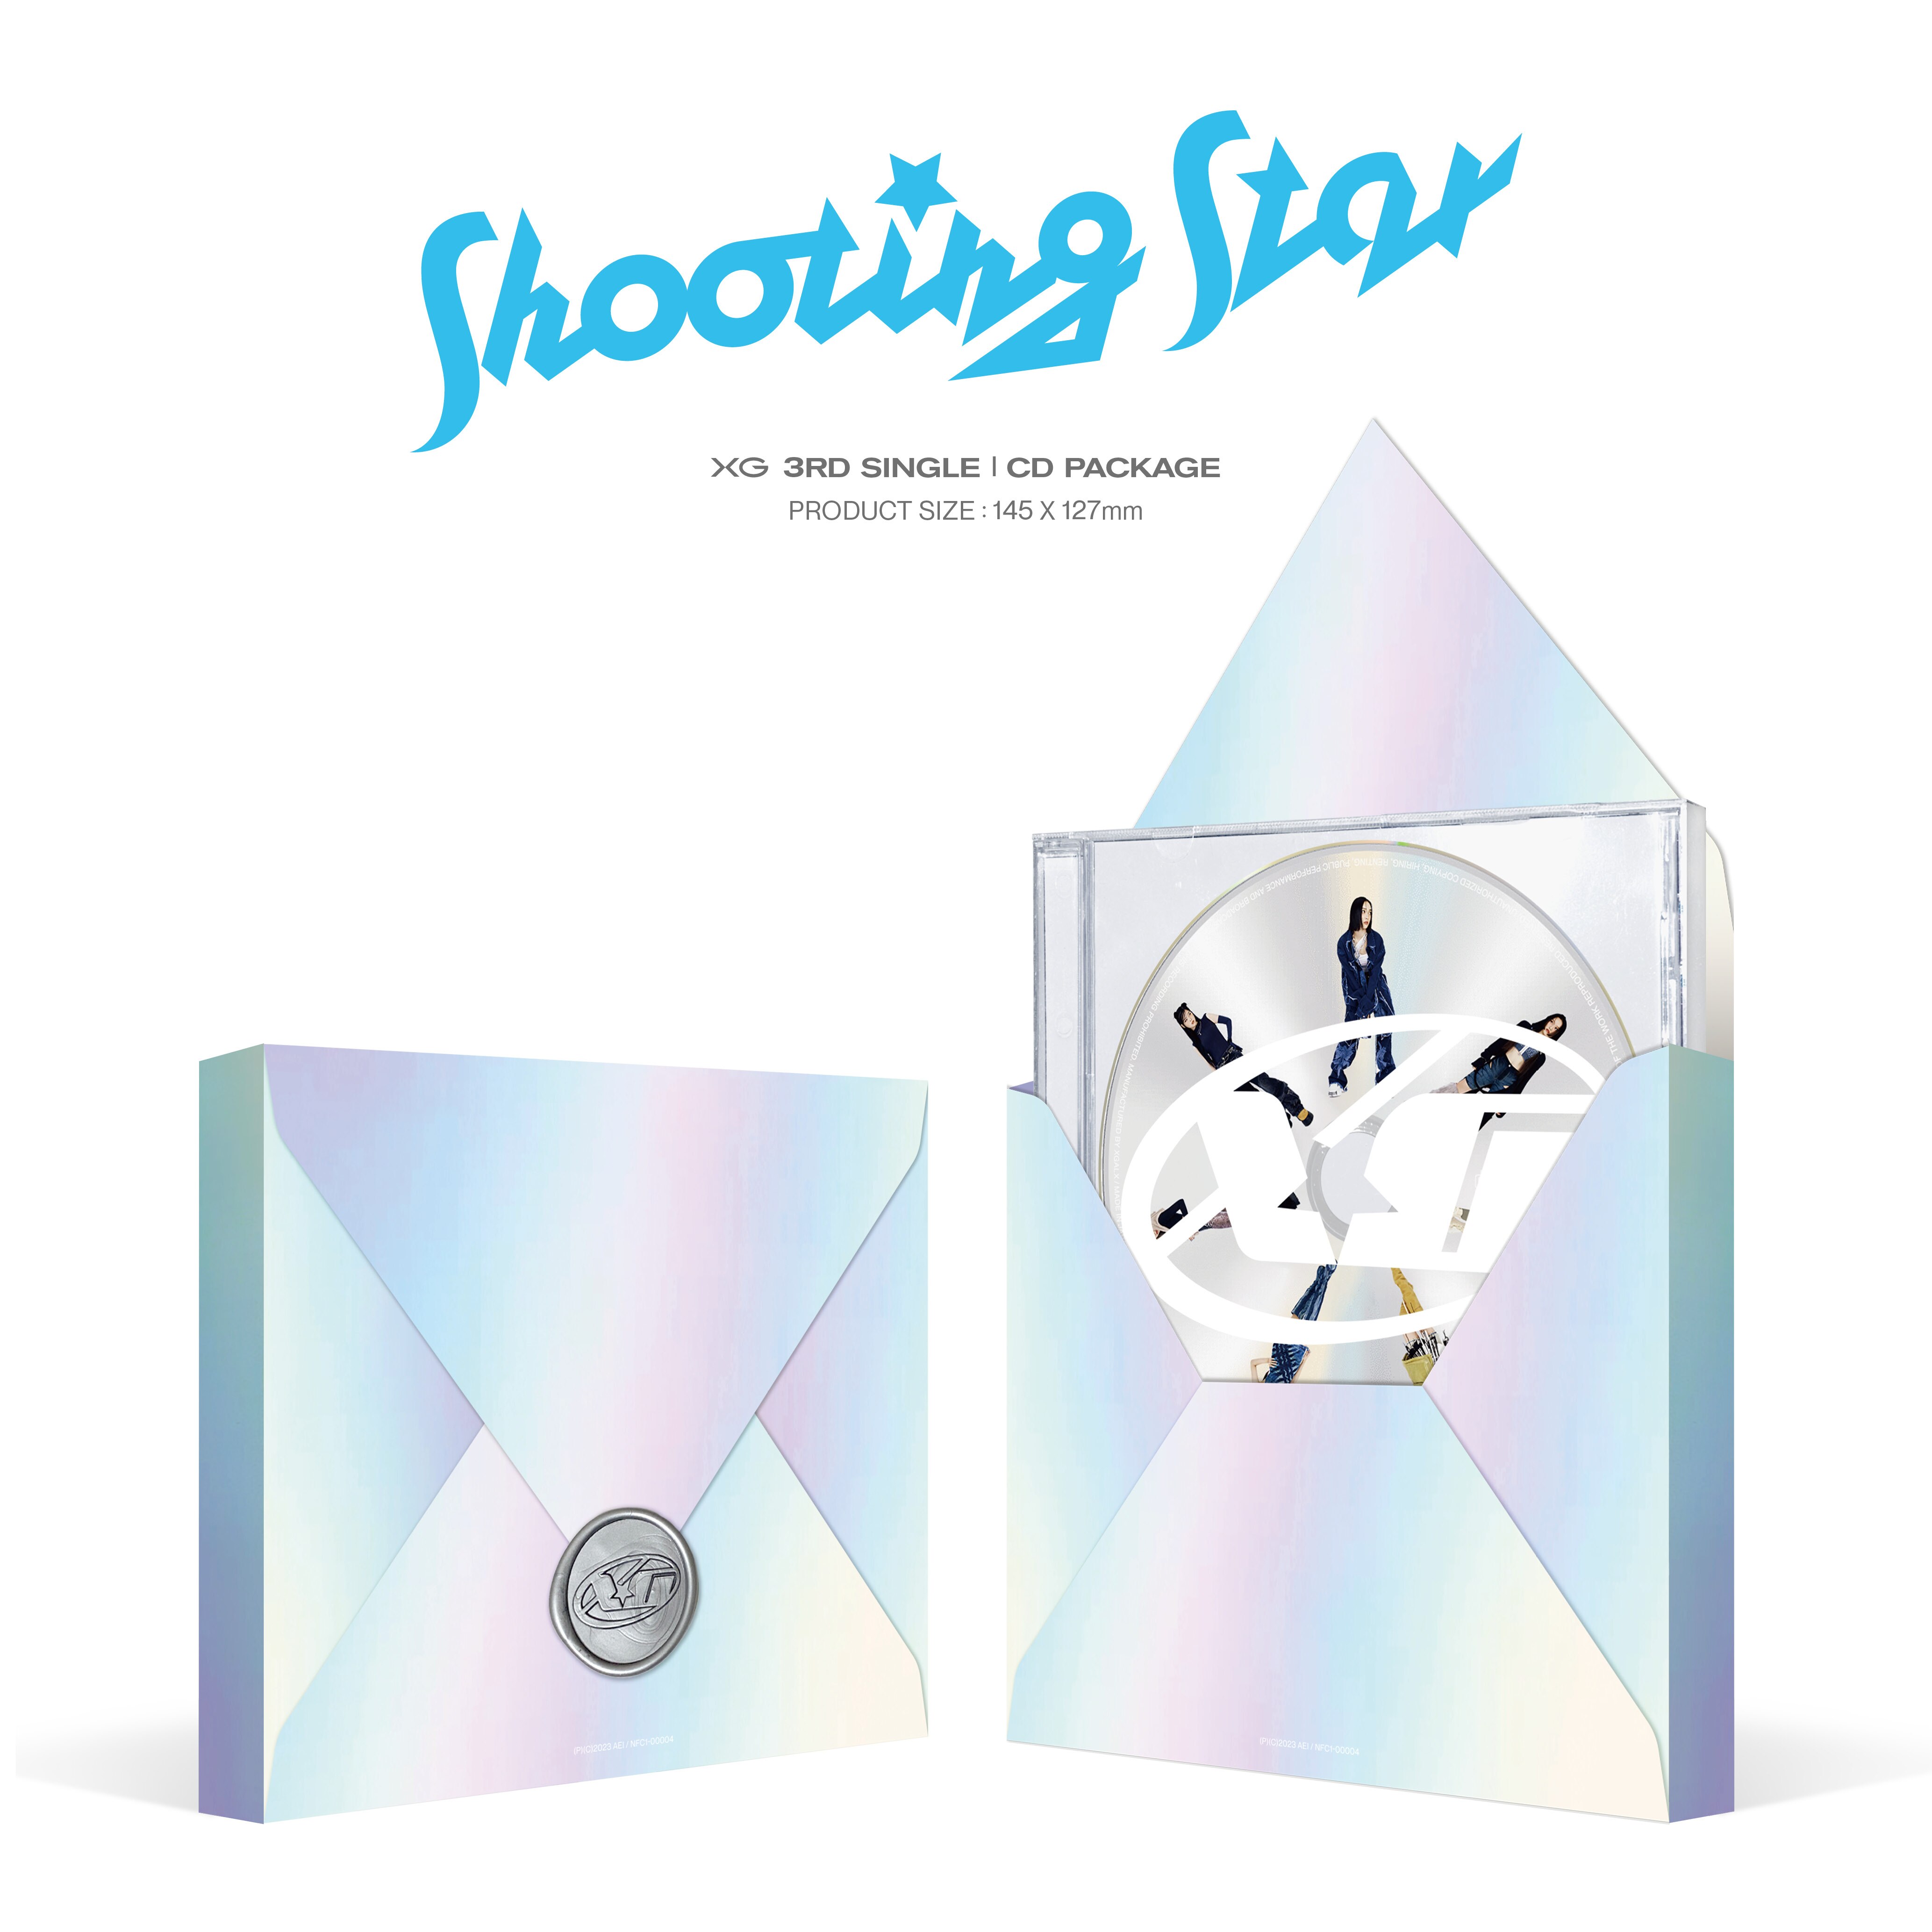 XG's 3rd single, “SHOOTING STAR” - Limited Edition CD Box Set